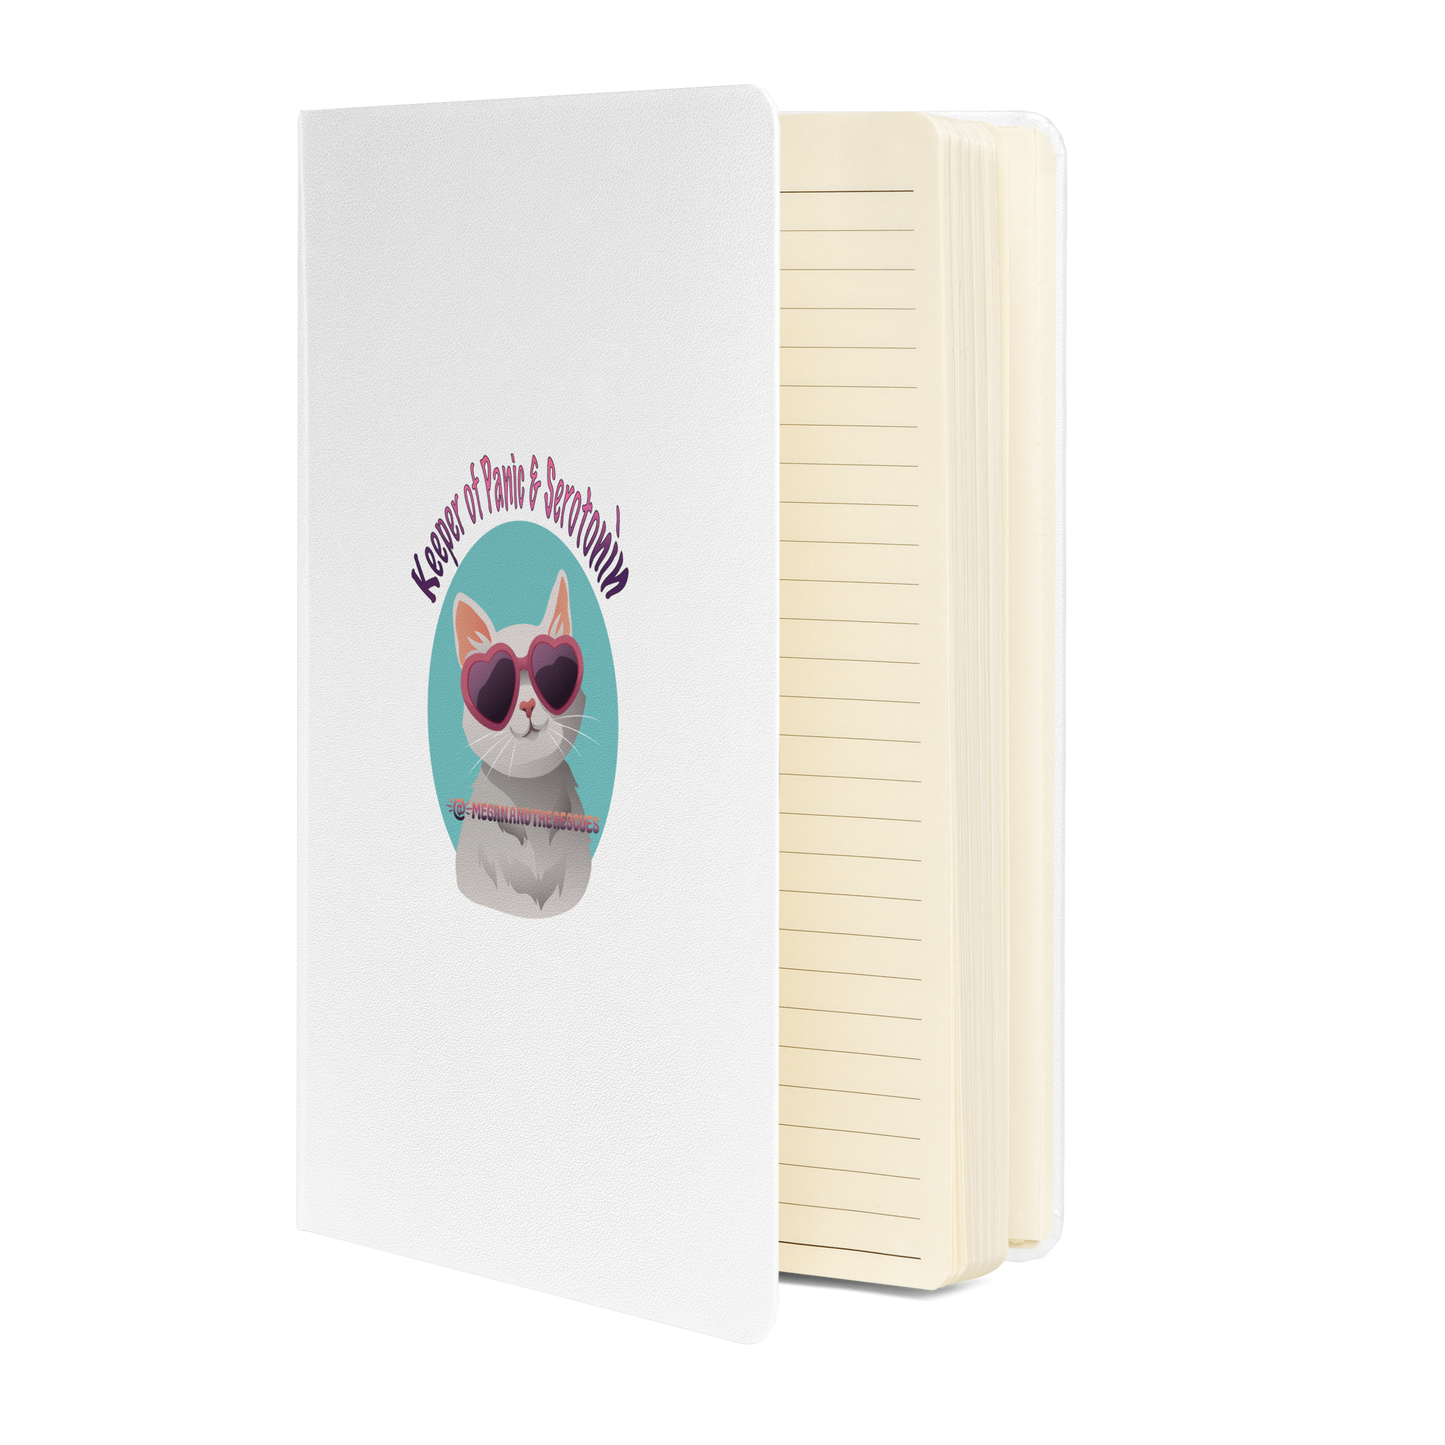 Keeper of Panic & Serotonin : Baby Bird - Hardcover bound notebook